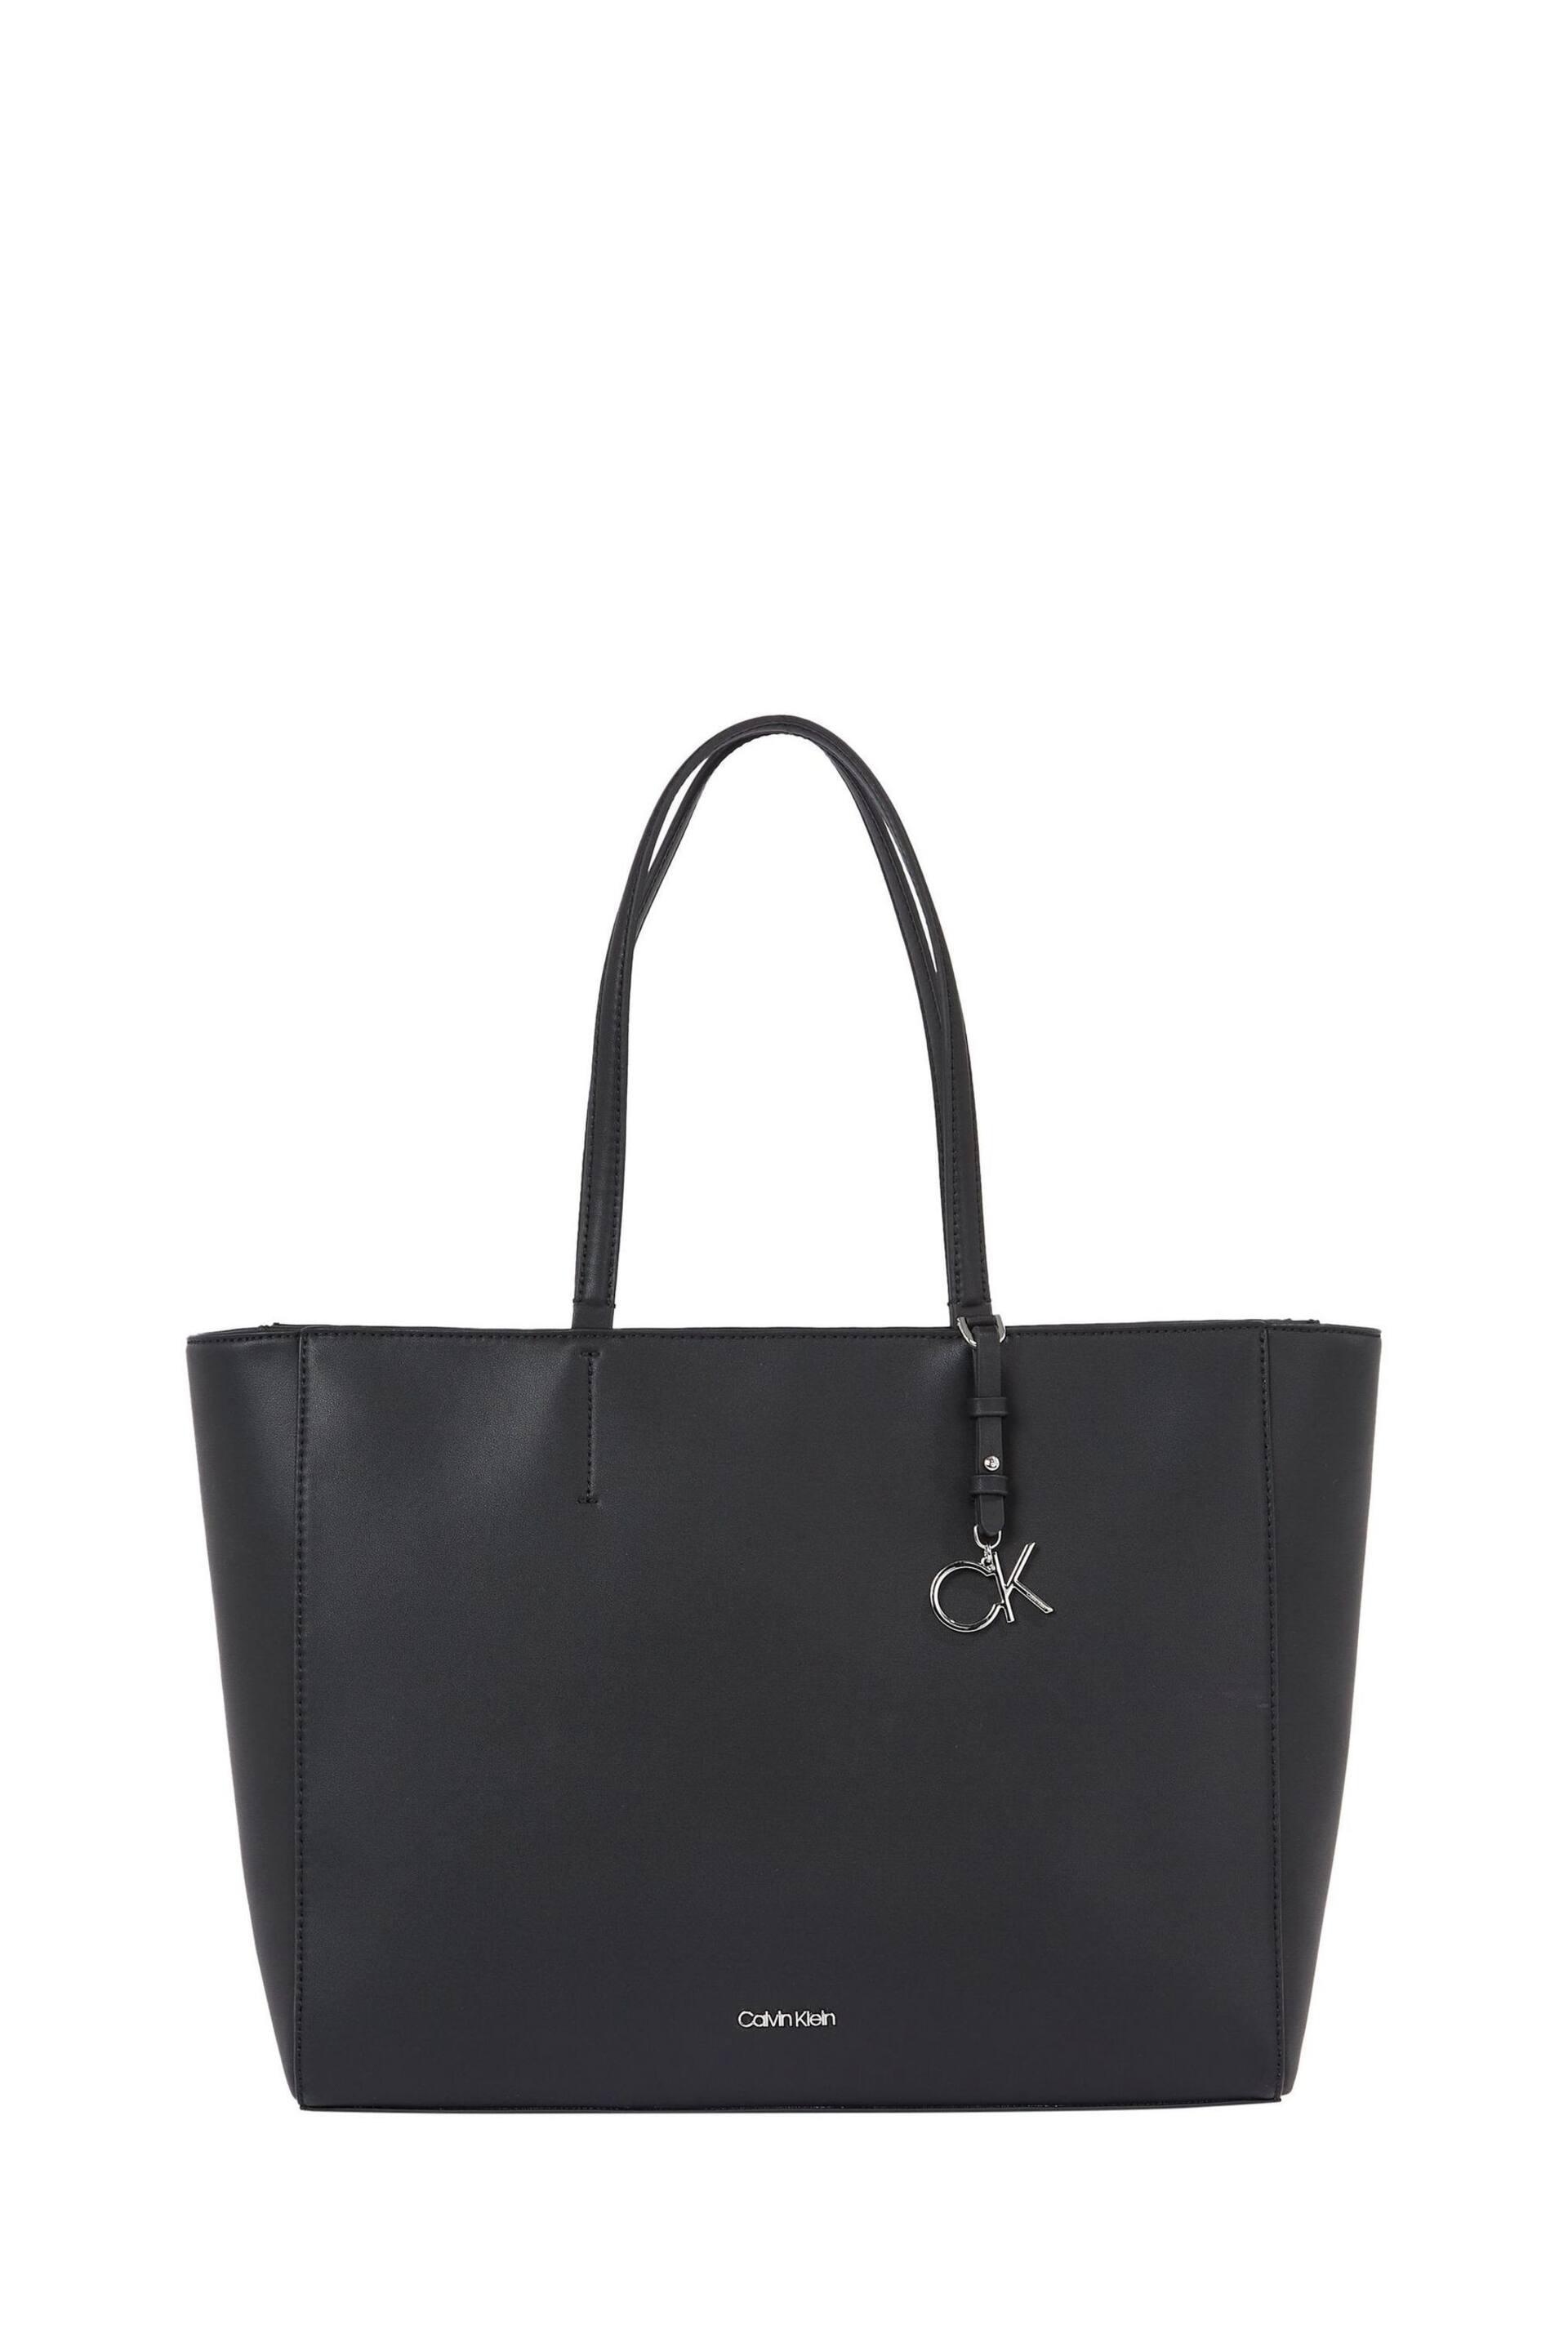 Calvin Klein Black Medium Shopper Bag - Image 2 of 4